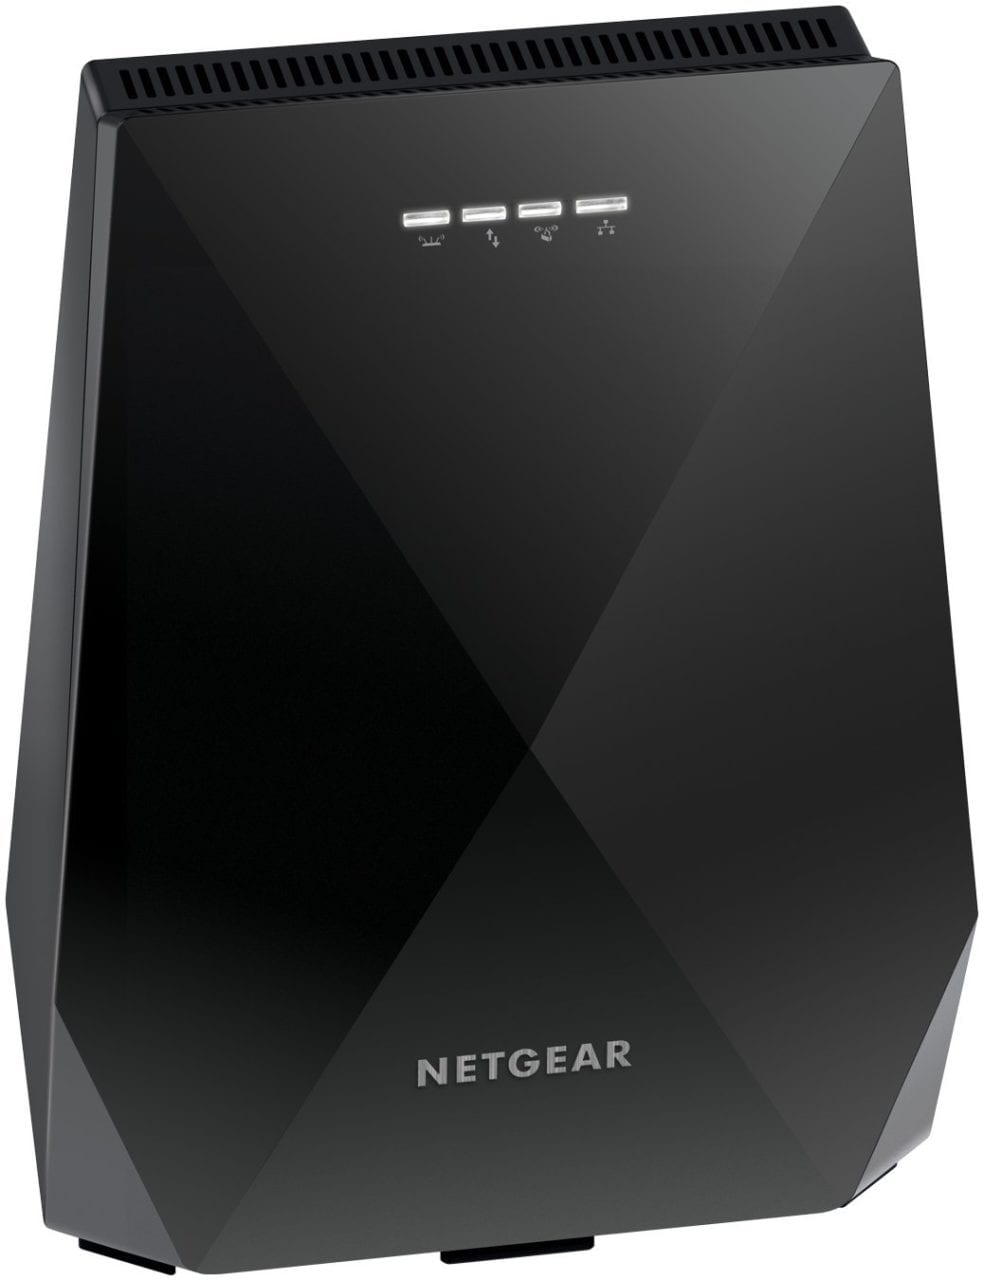 Netgear Nighthawk X6 wifi extender